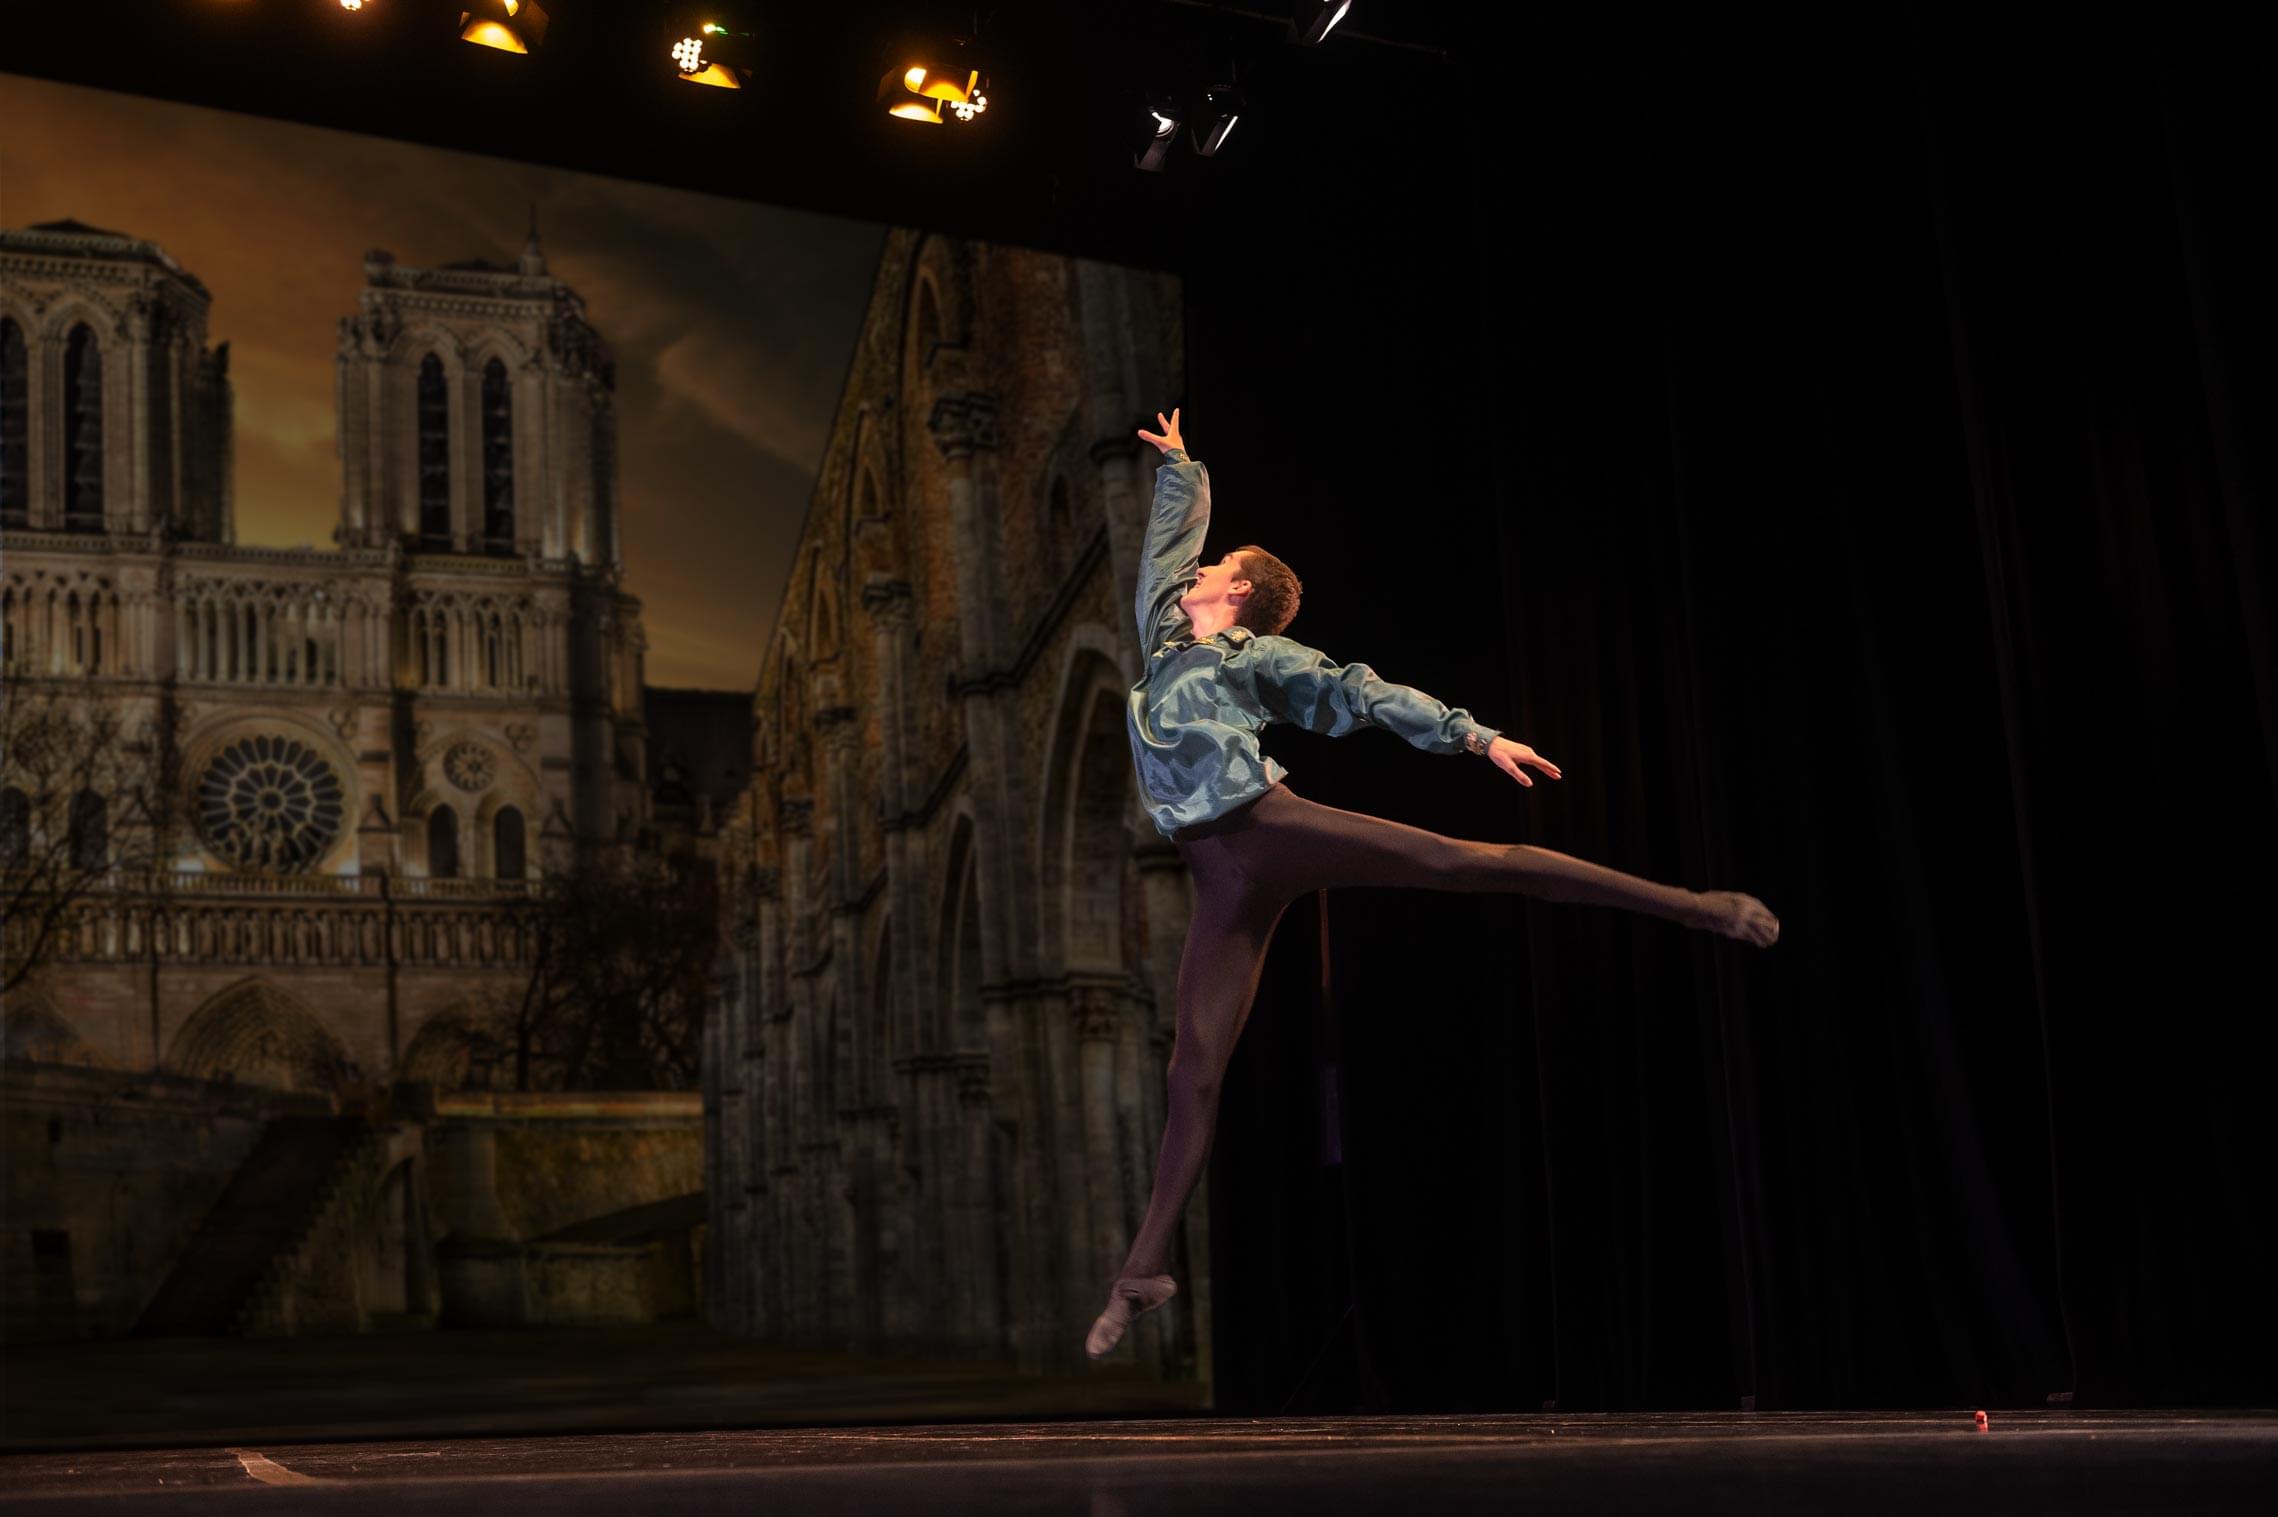 Escuela Ballet Anne Markoartu. Esmeralda